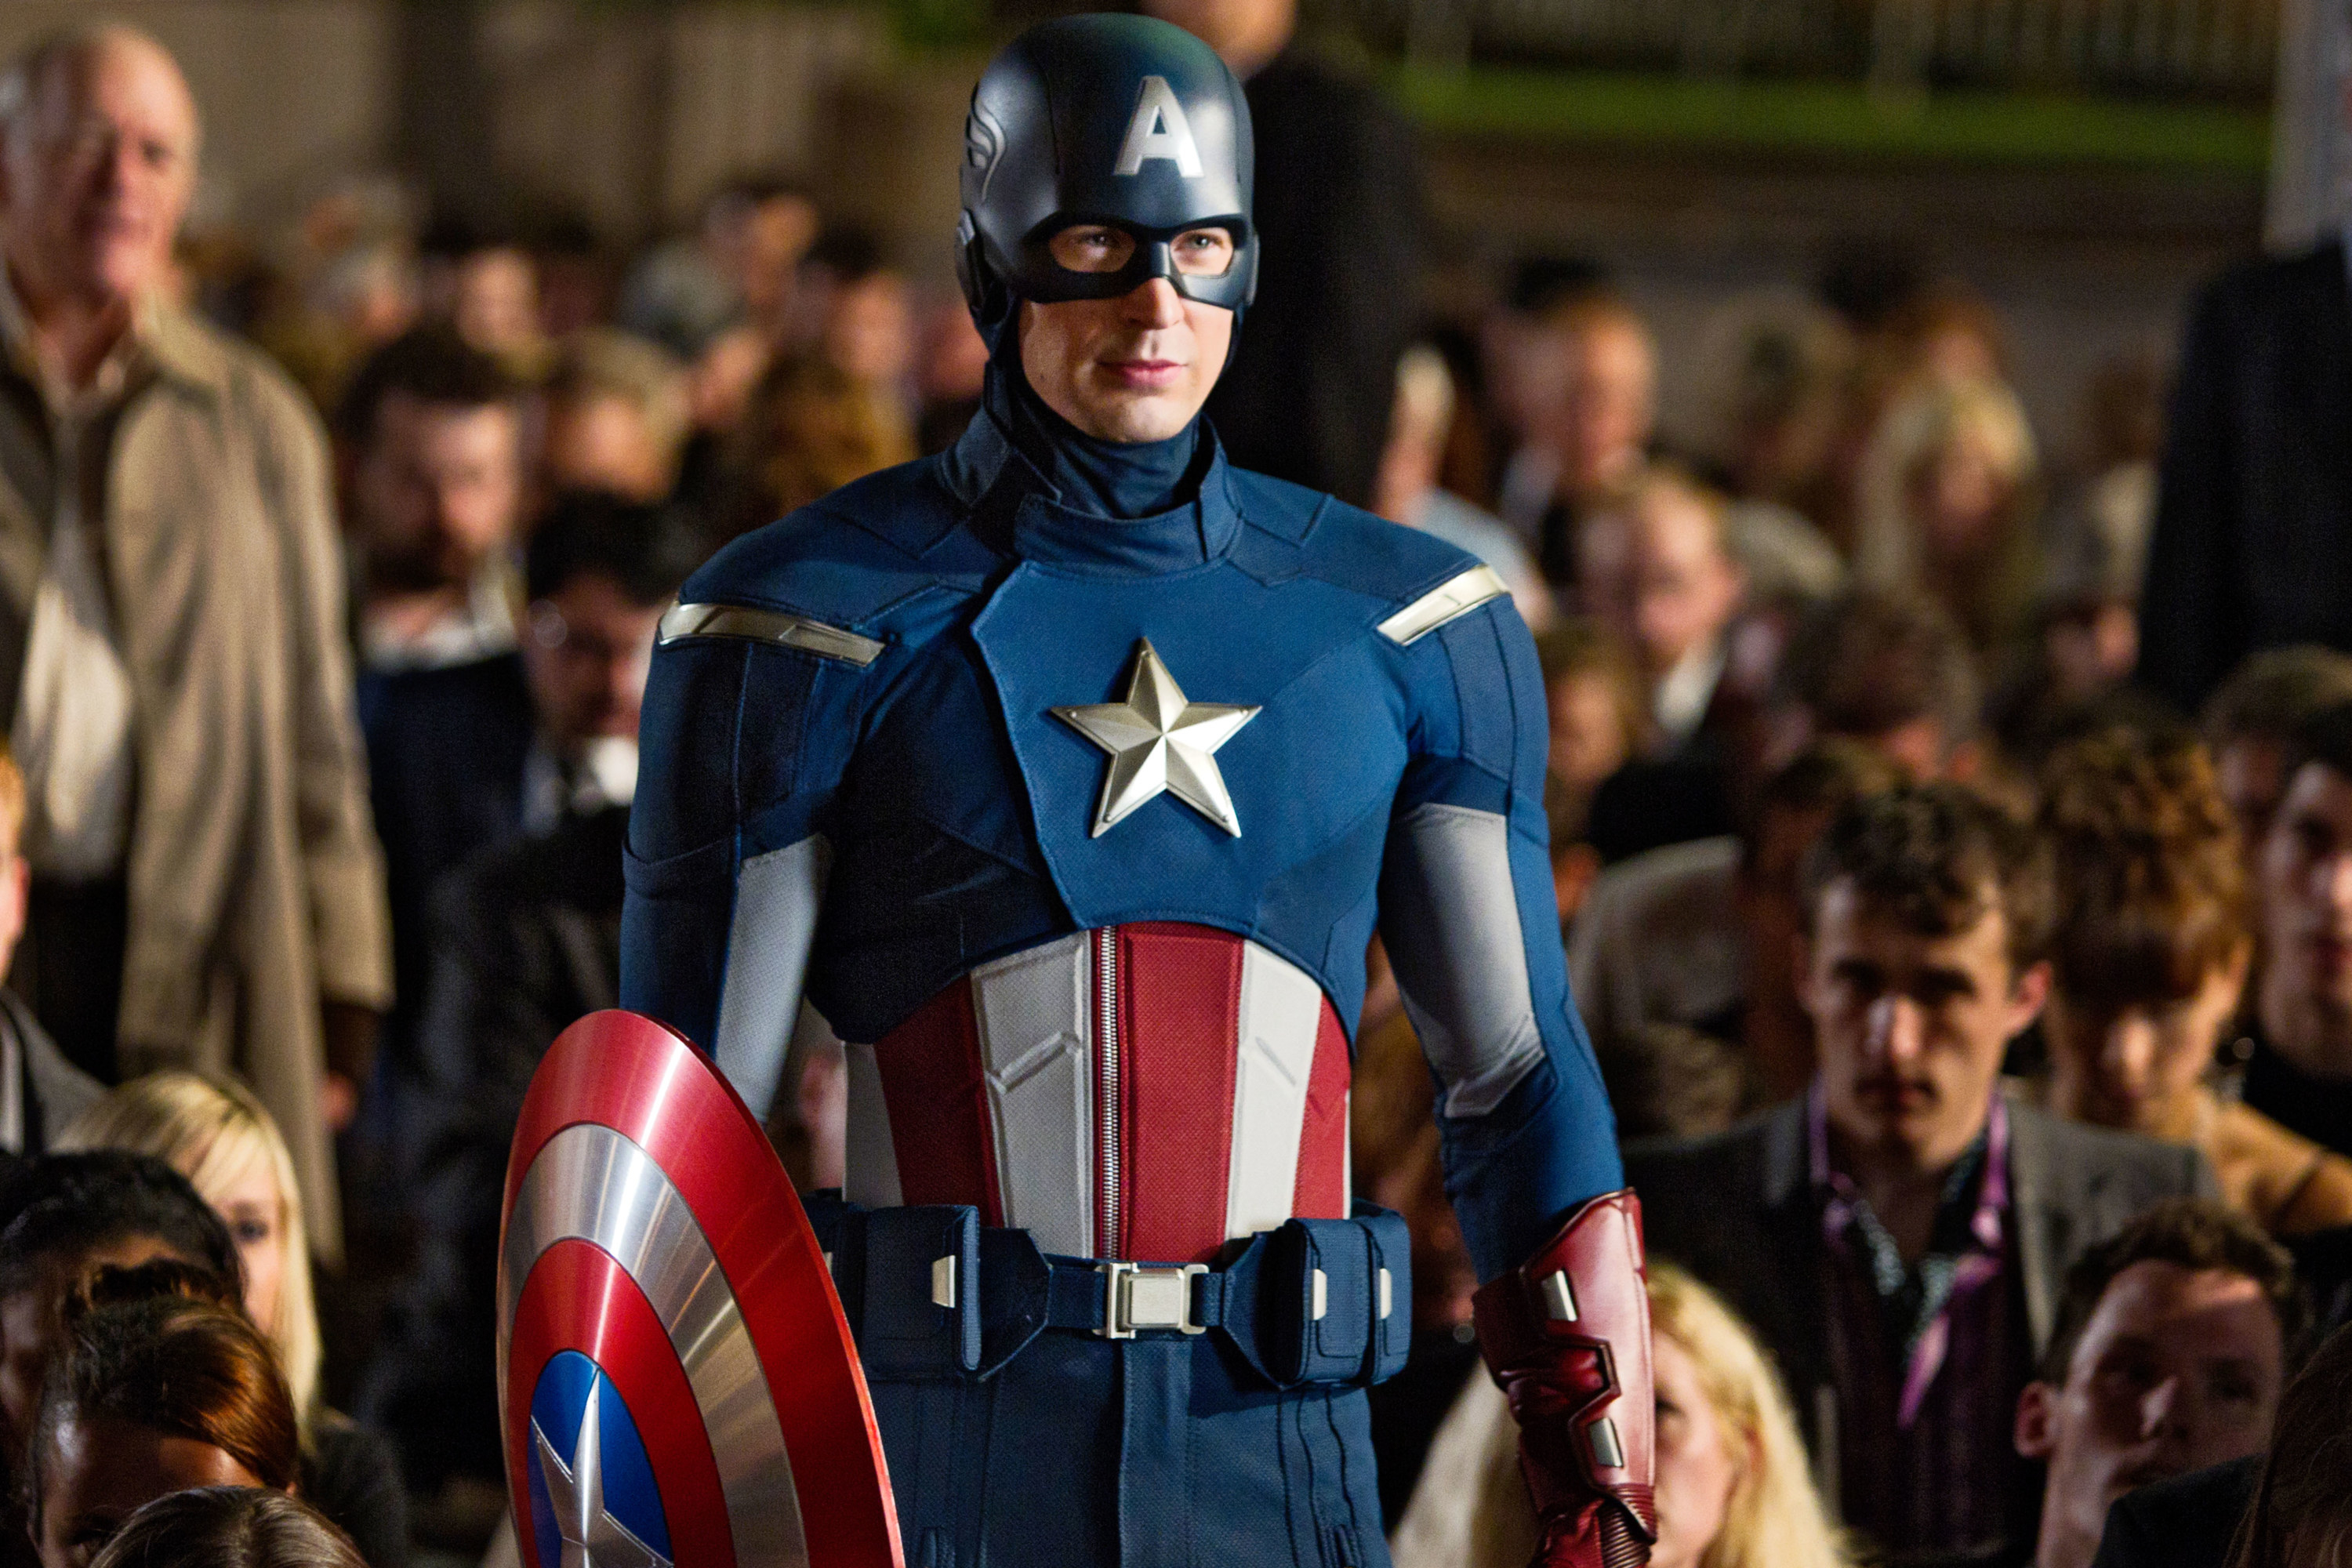 Chris Evans as Captain America